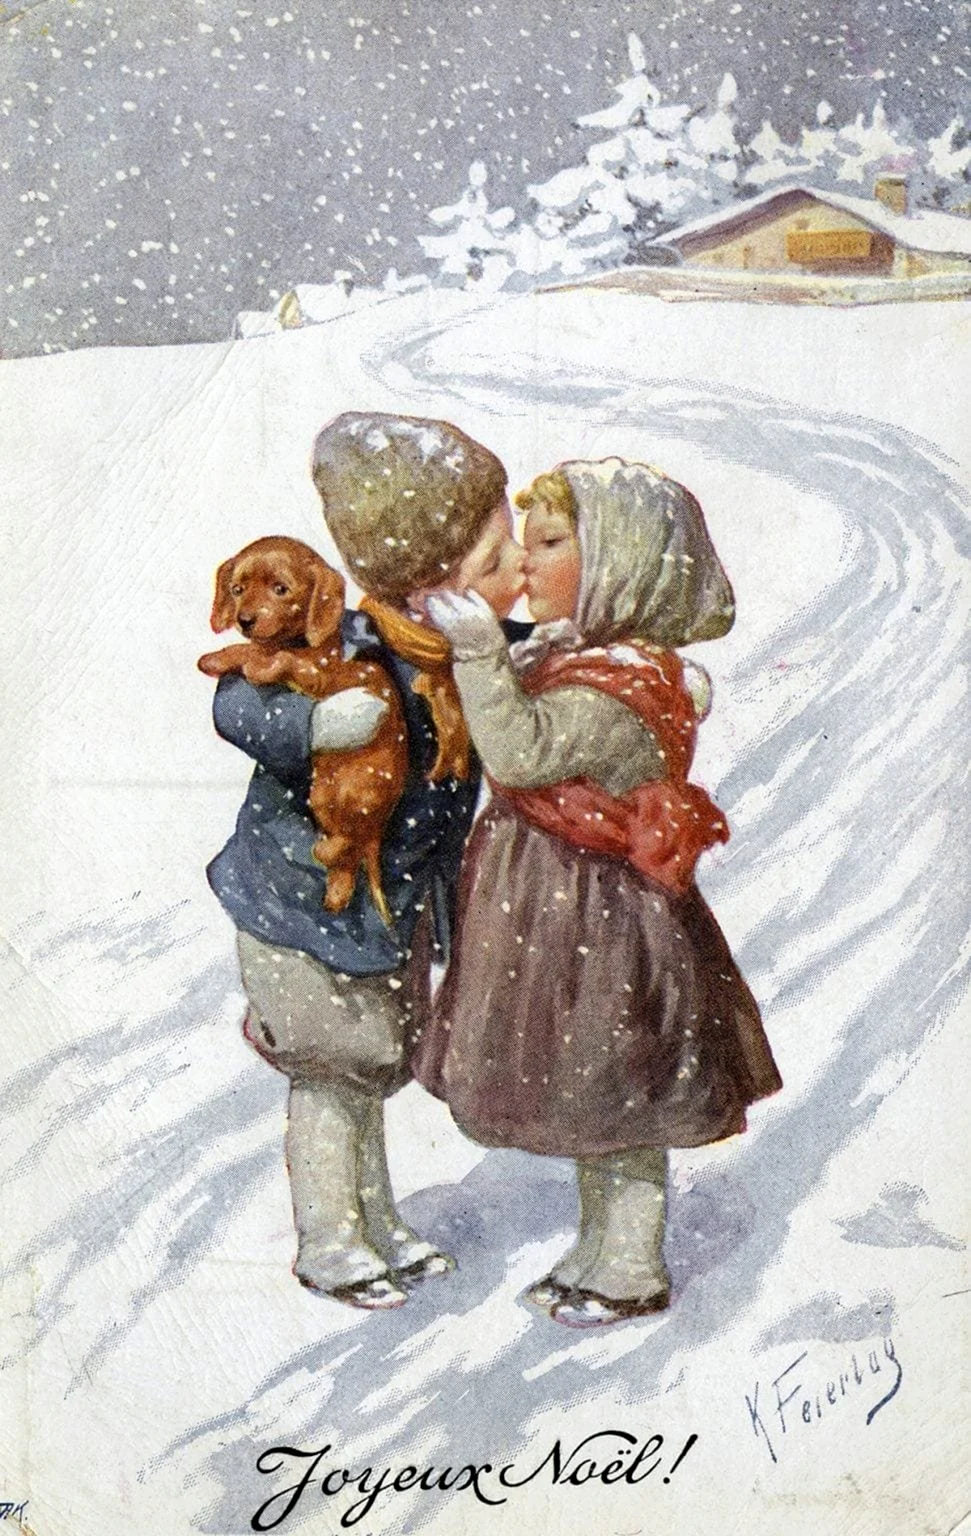 Винтажная зимняя открытка